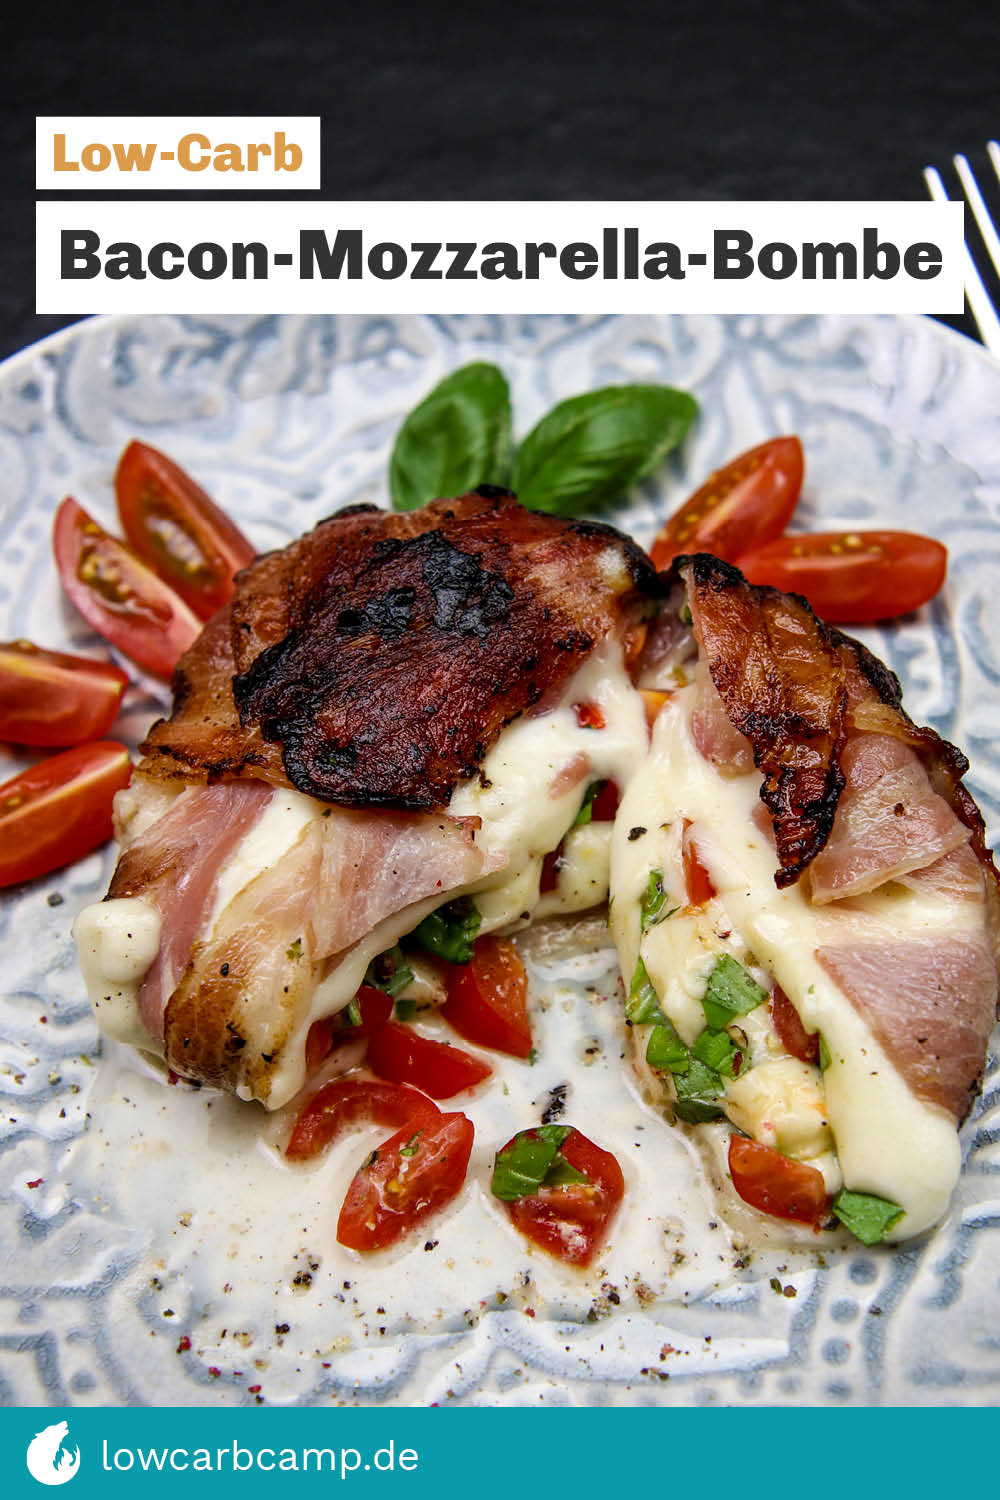 Low-Carb Bacon-Mozzarella-Bombe